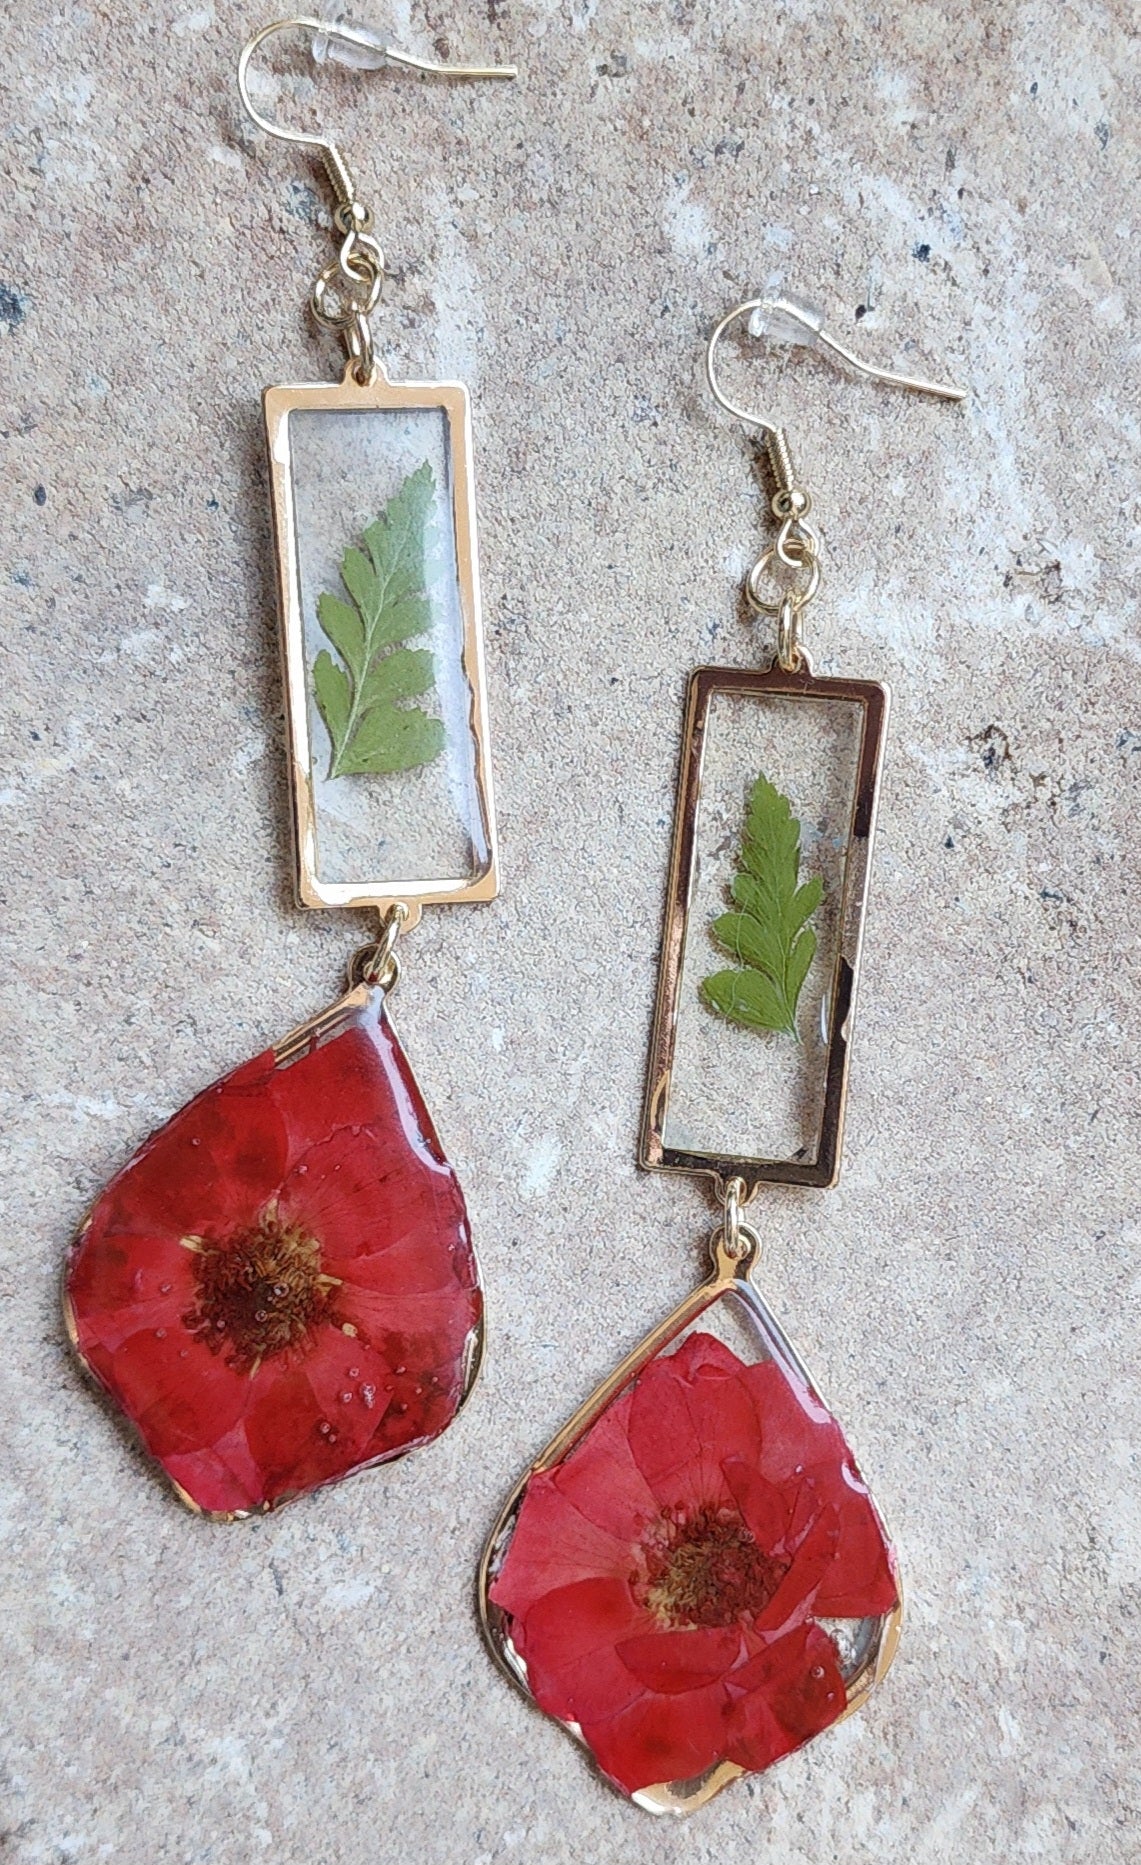 Pressed Flower Earrings - Tiny Red Roses